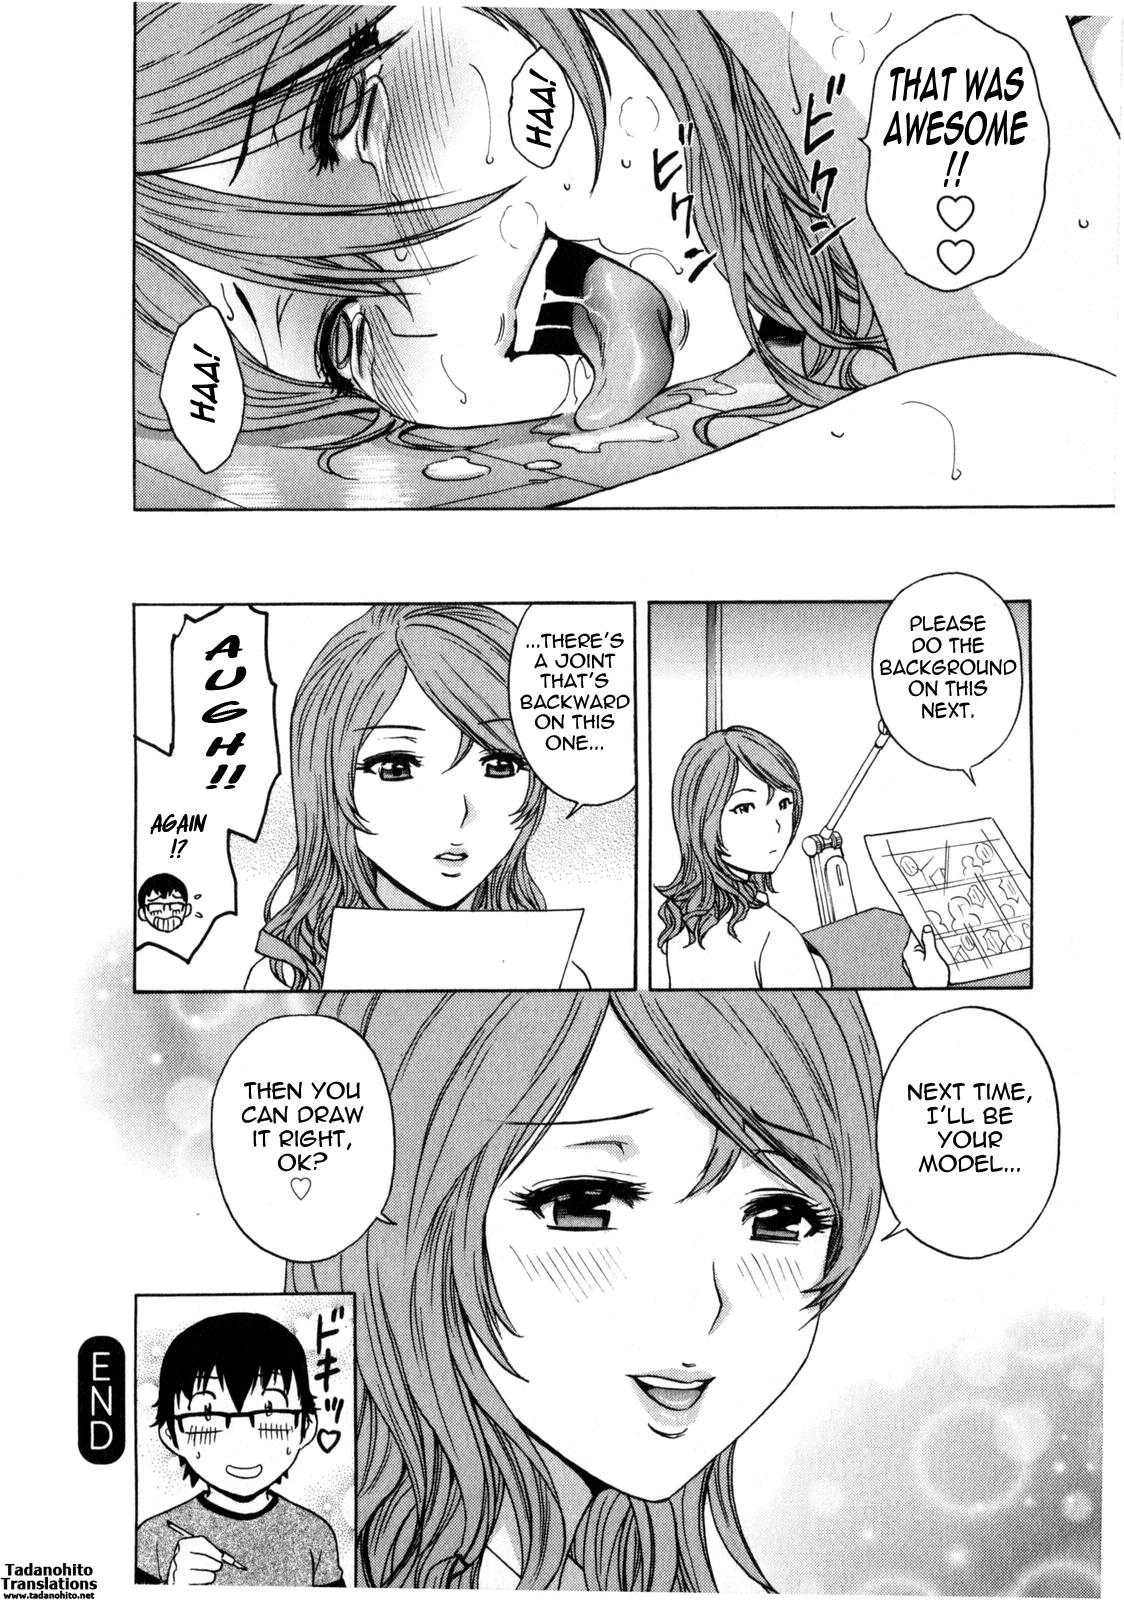 [Hidemaru] Life with Married Women Just Like a Manga 2 - Ch. 1-5 [English] {Tadanohito} 44